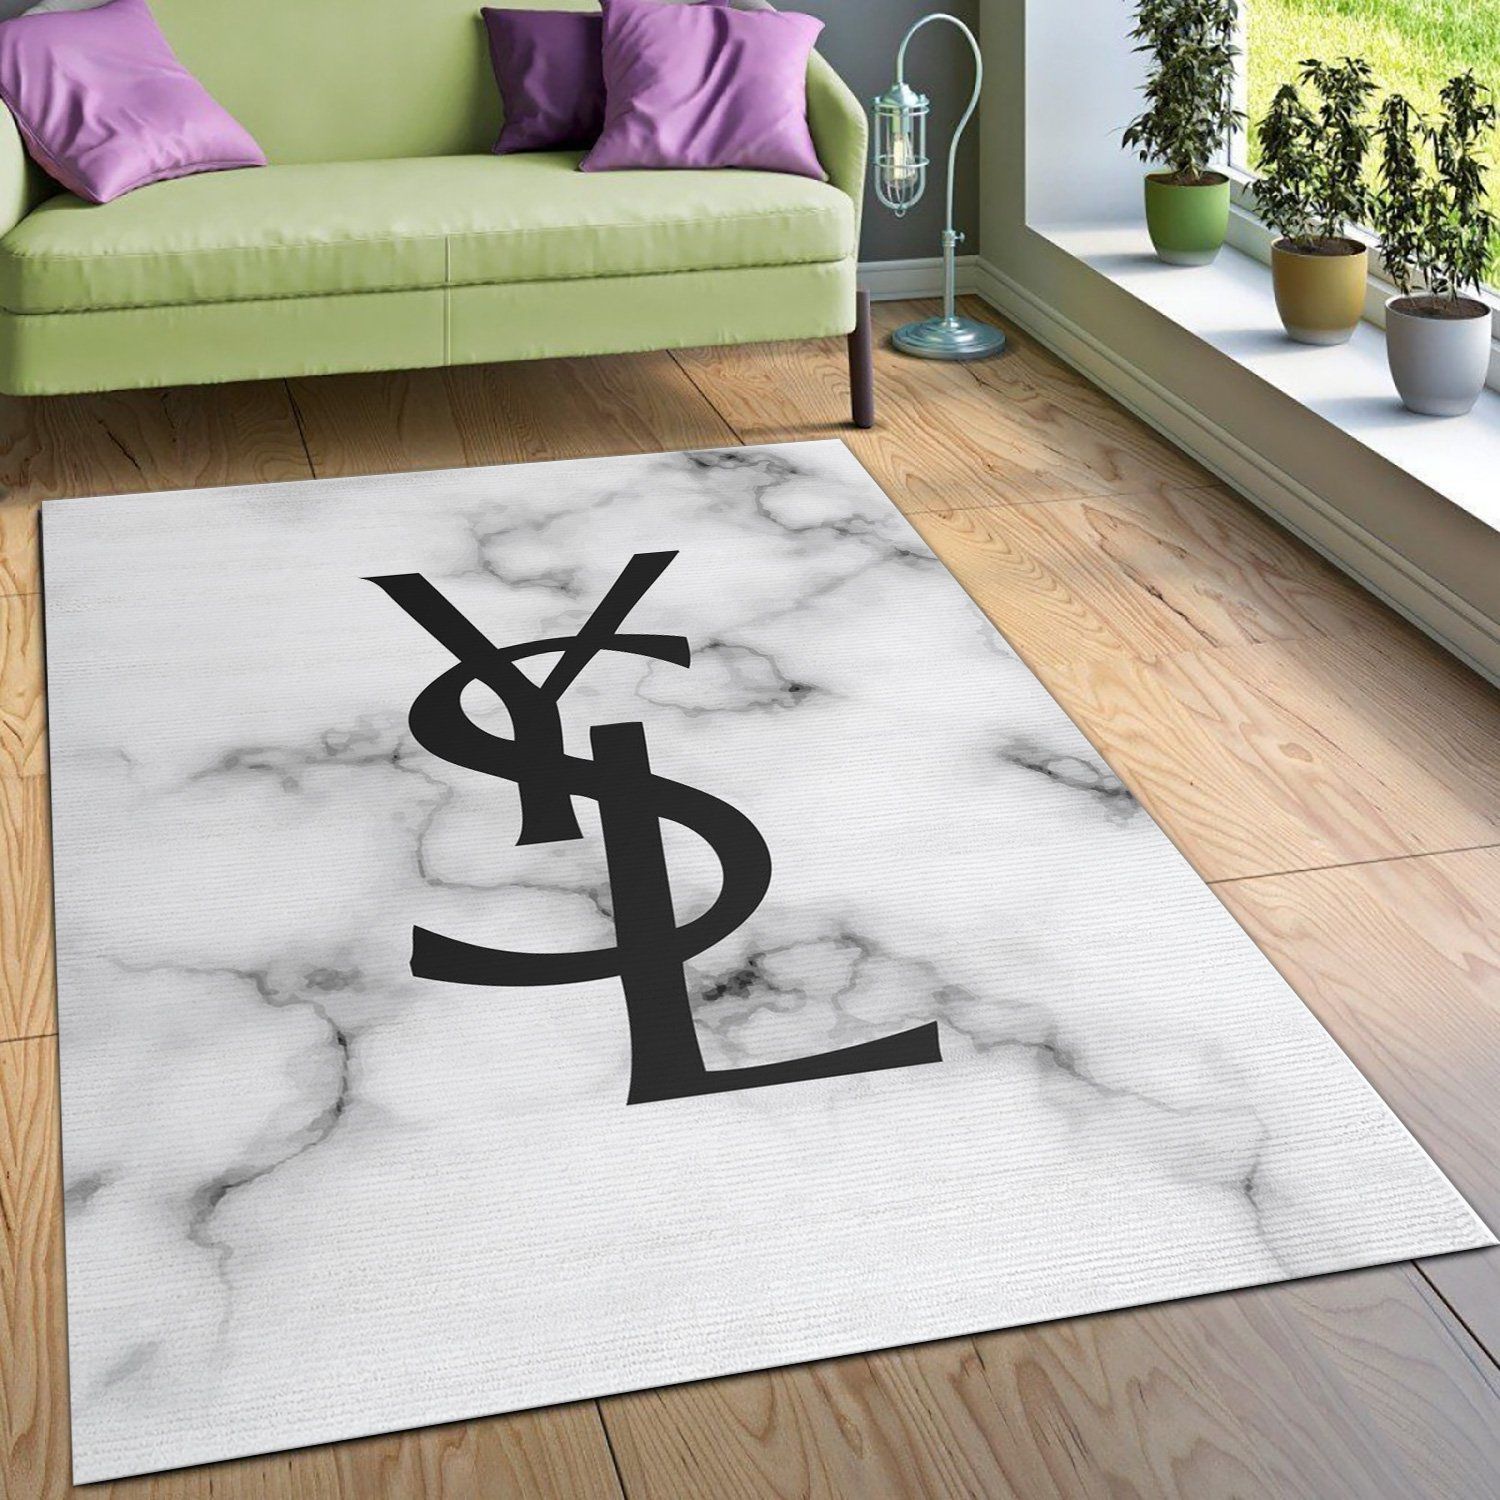 Ysl Yves Saint Laurent Rectangle Rug Fashion Brand Rug Christmas Gift US Decor - Indoor Outdoor Rugs 3